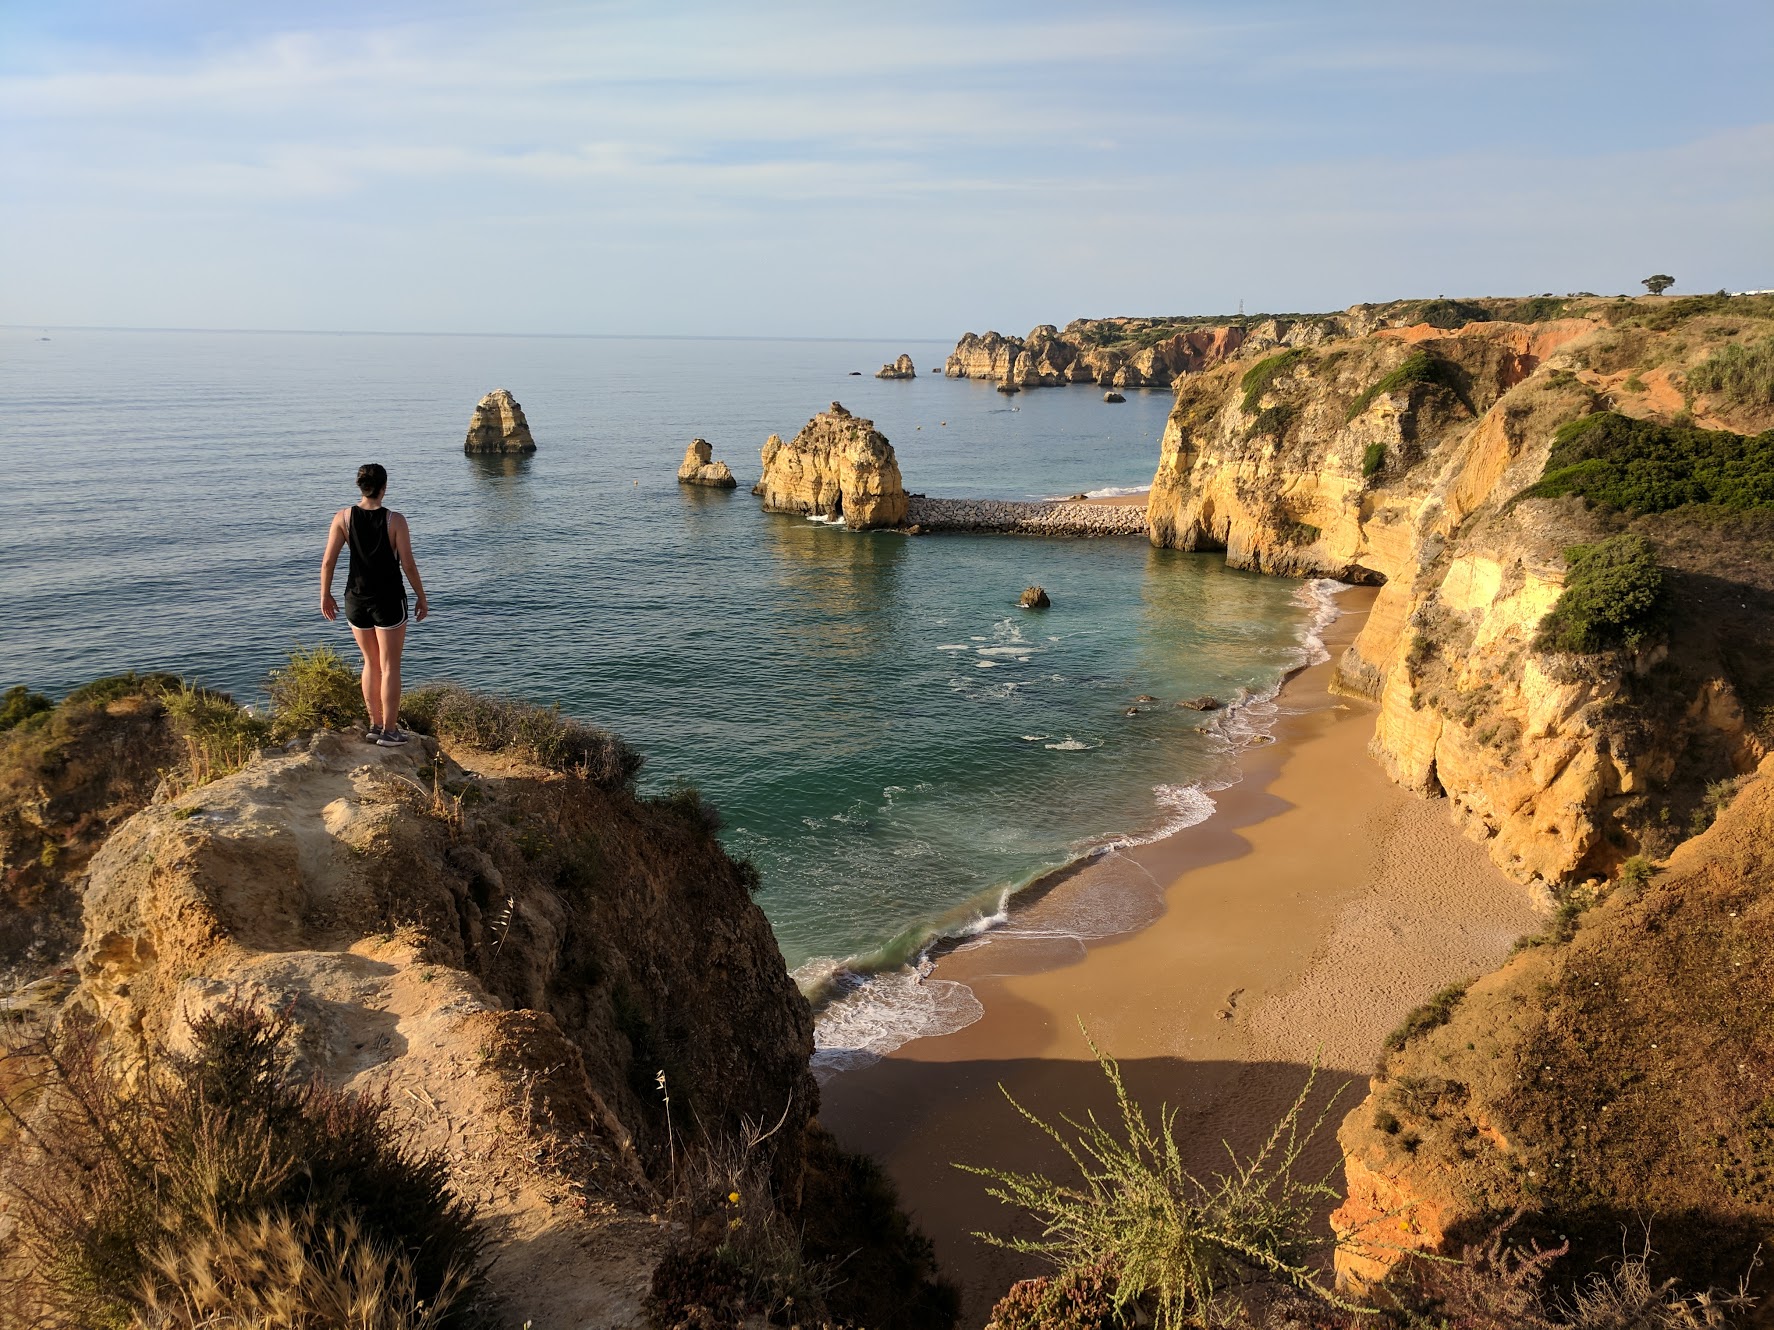 IMG 20180618 080314 - The Algarve Travel Guide